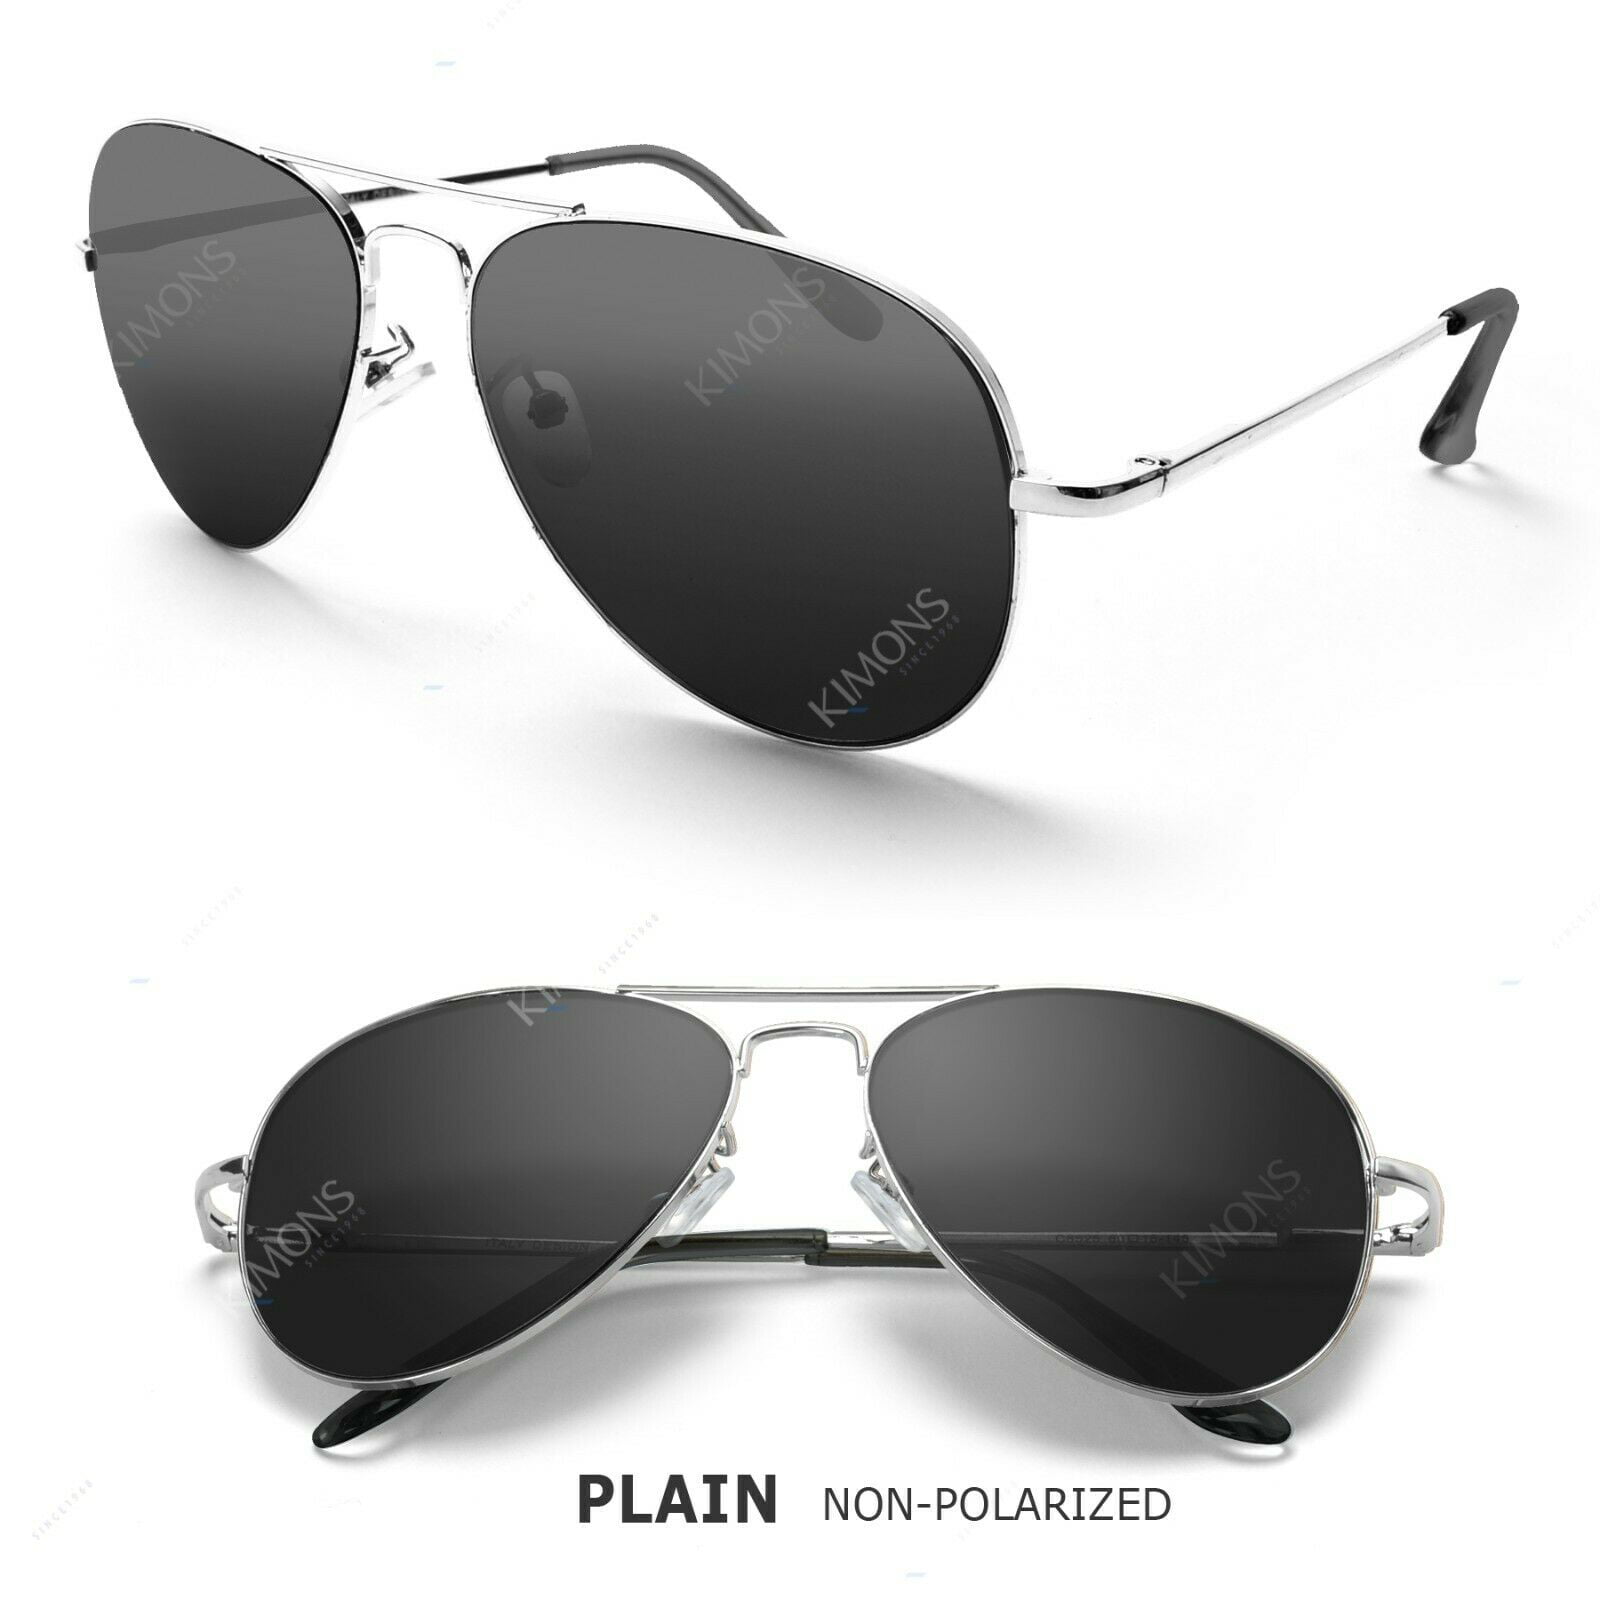 Ruptop Sunglasses Men Polarized Driving Sun Glasses Mens Sunglasses Brand Designer Fashion Aviator Sunglasses 007 Black